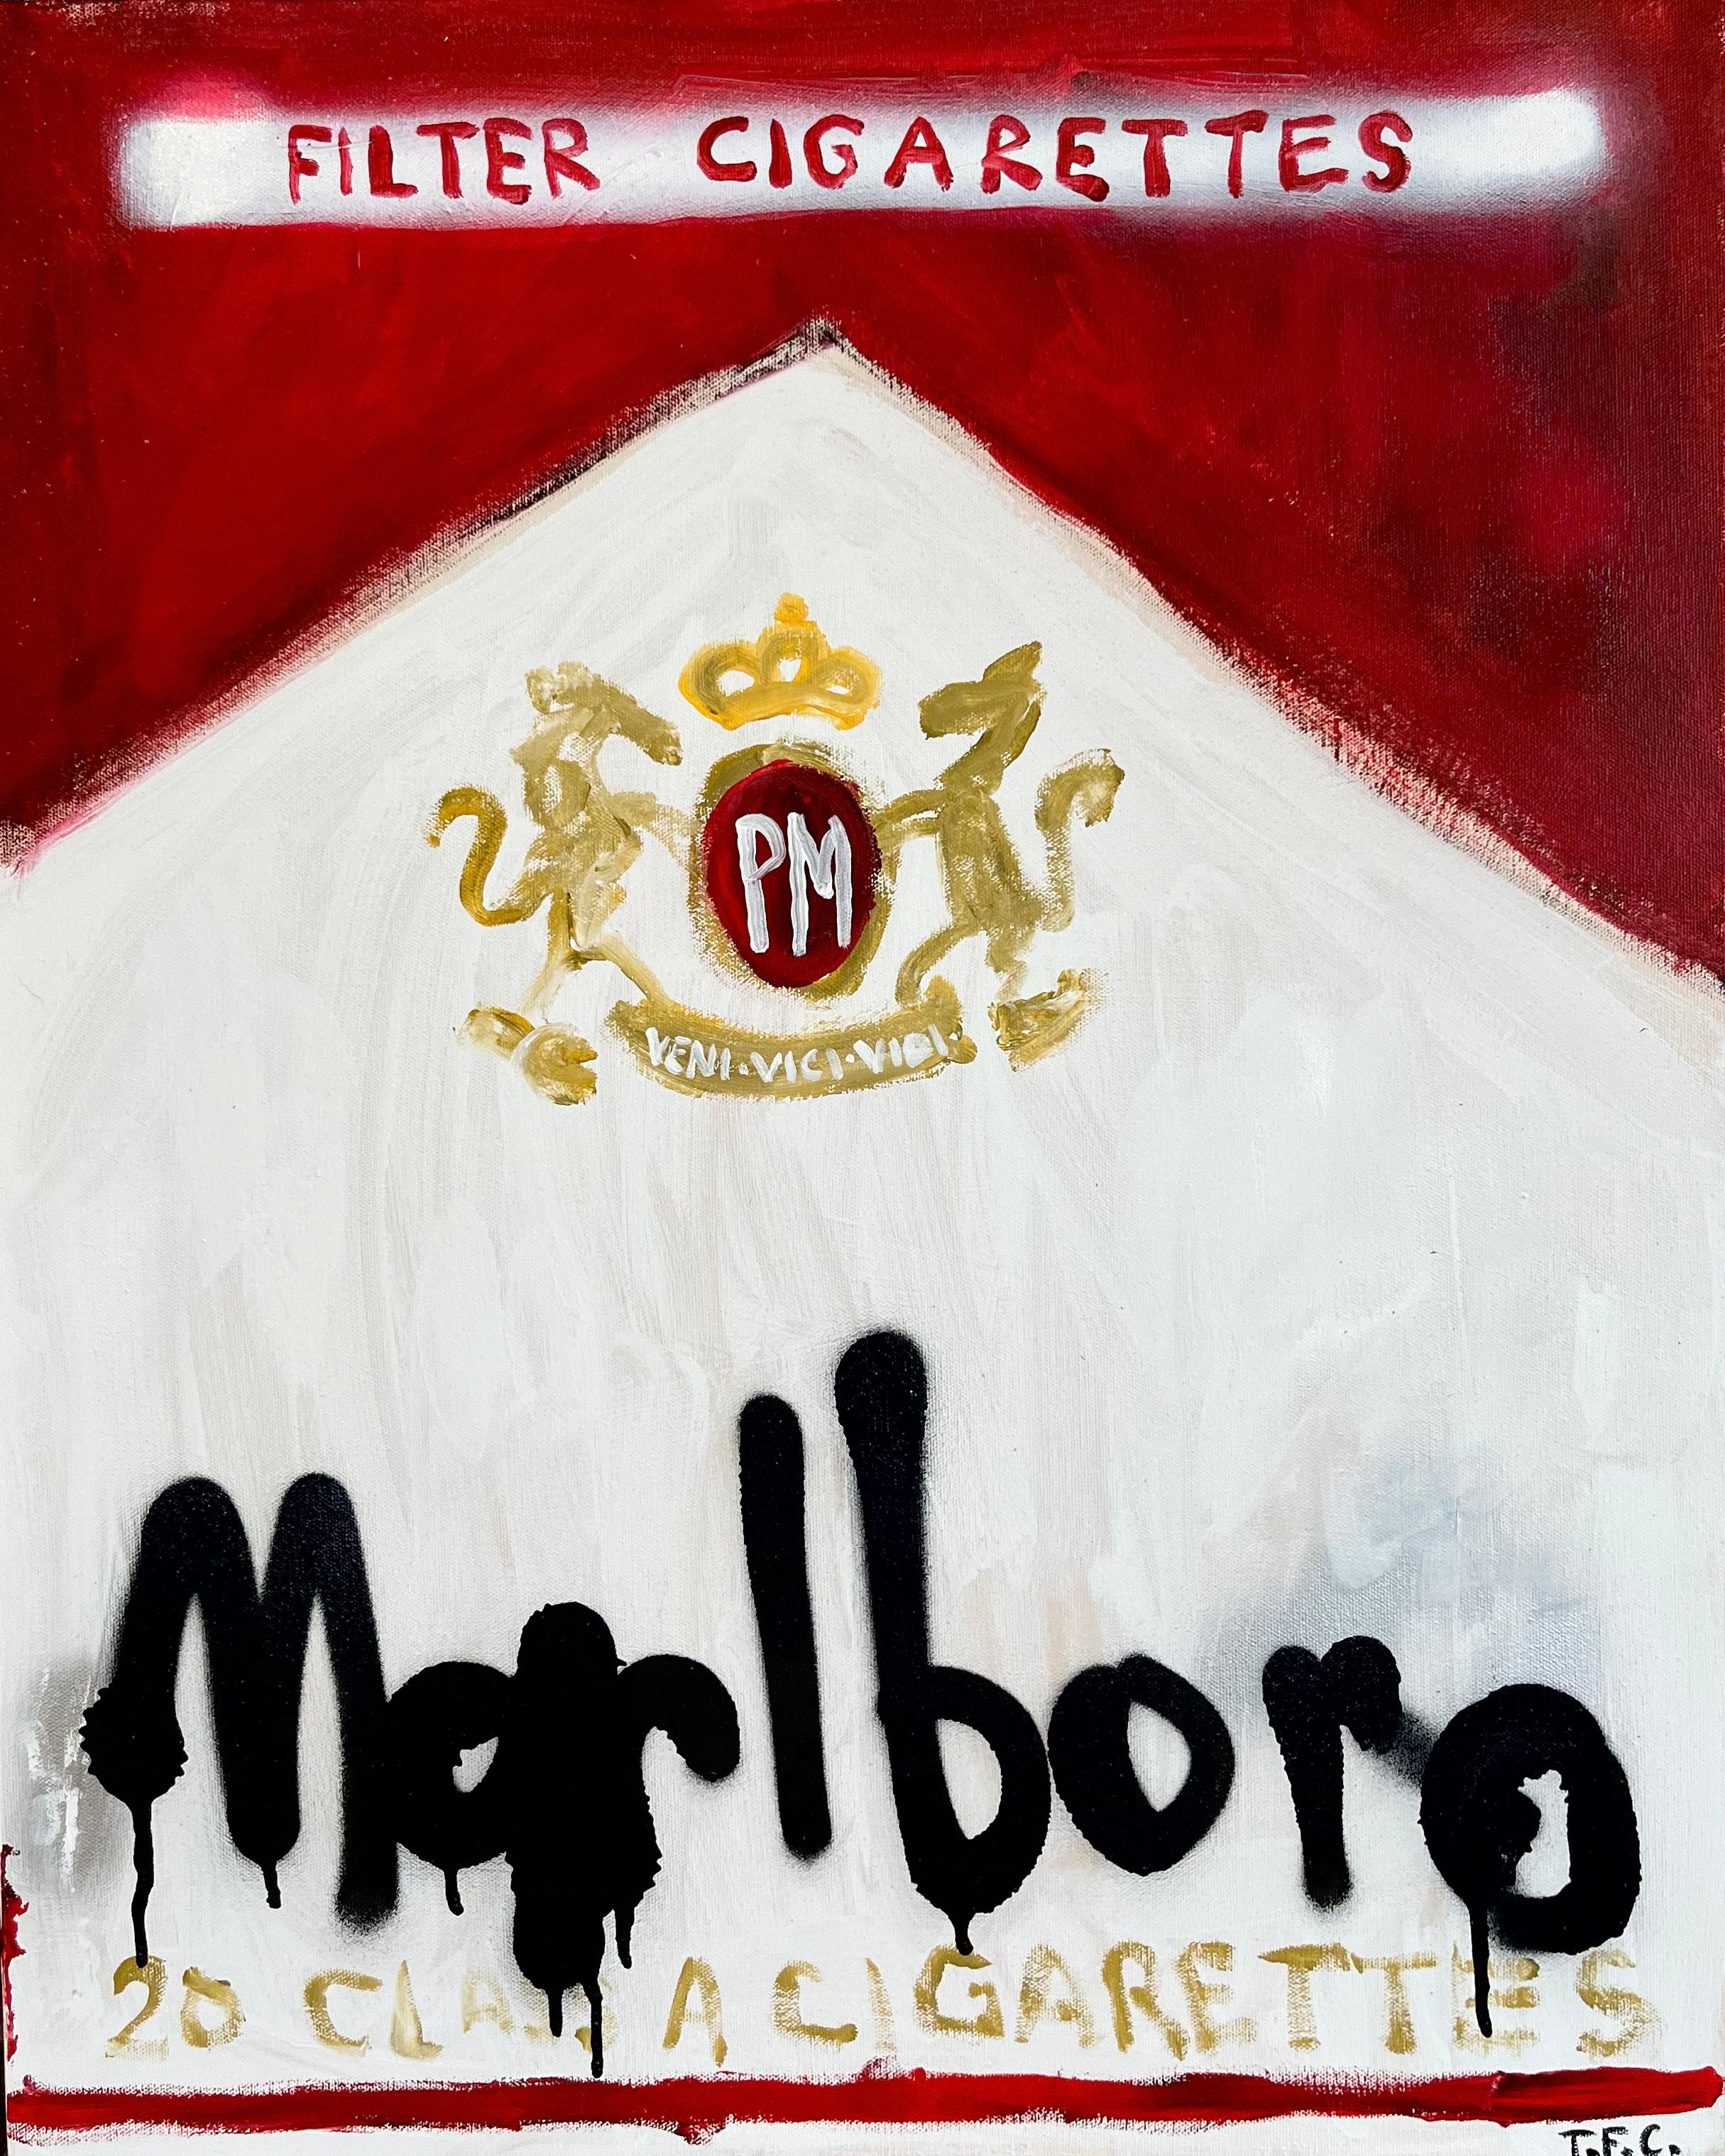 Tyler Casey Still-Life Painting - "Marlboro" Contemporary Abstract Pop Art Cigarette Packet Painting